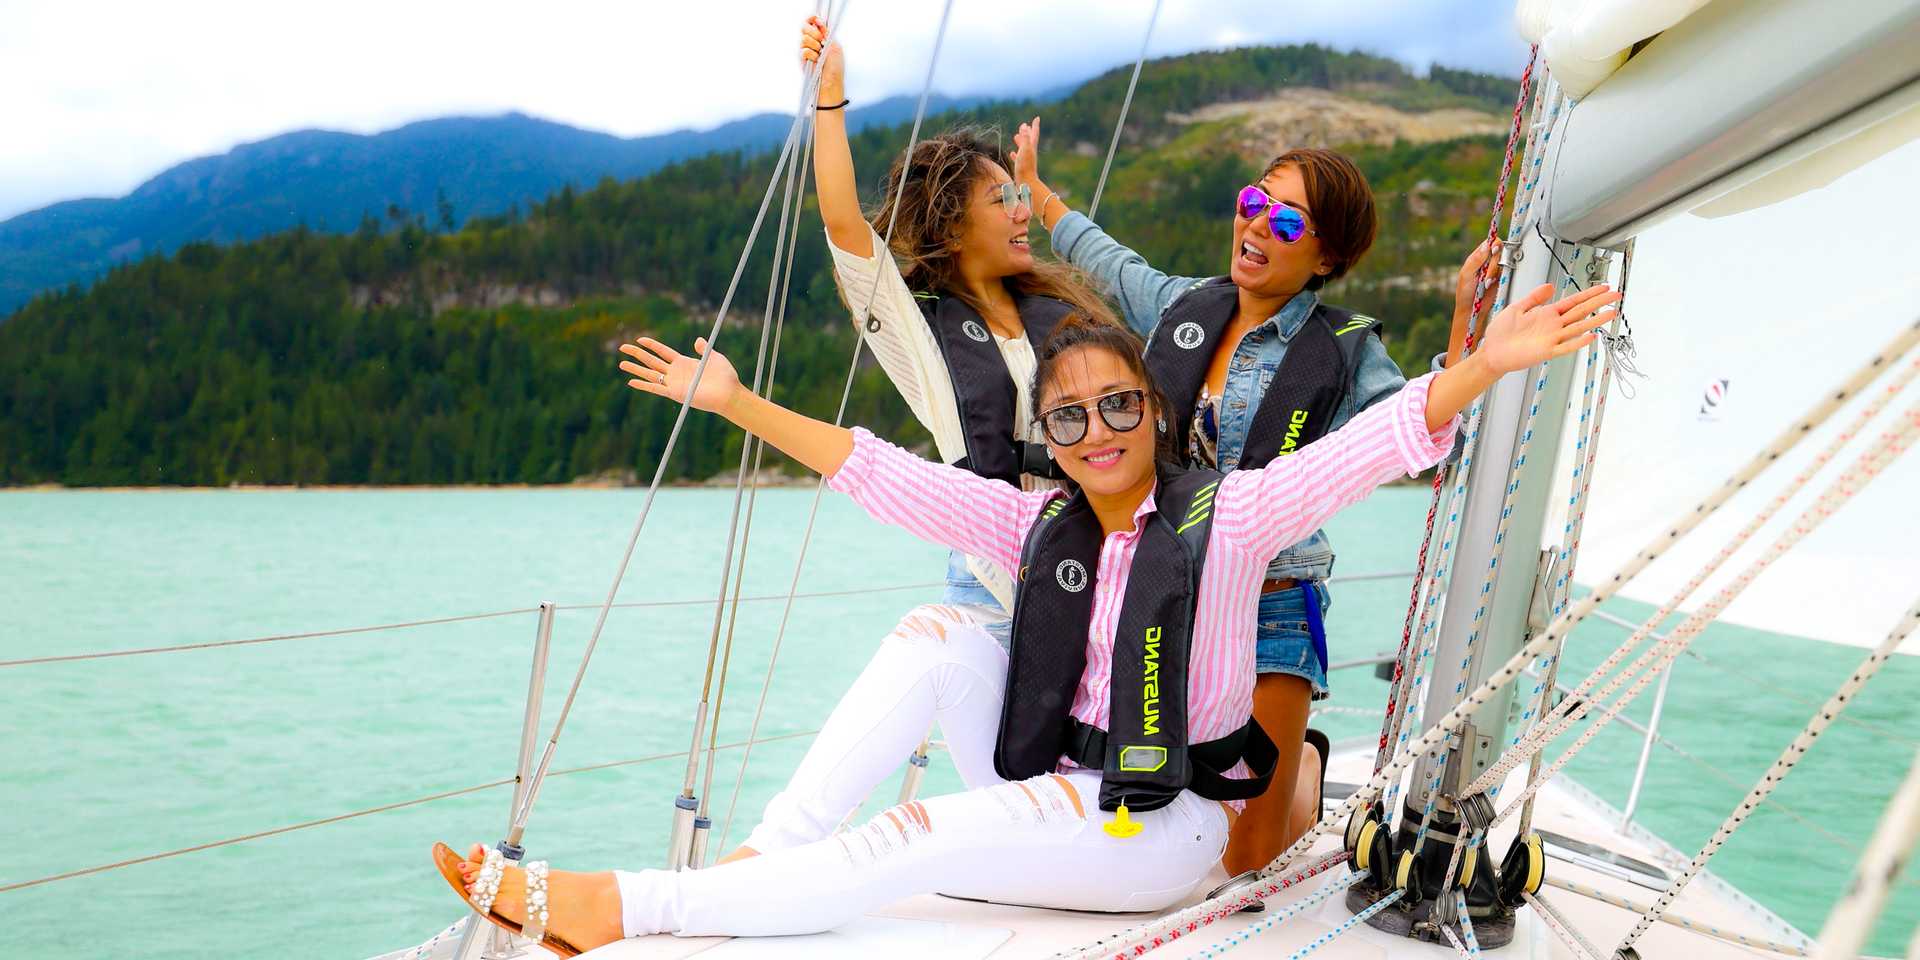 Pretty ladies celebrating a birthday on a sailboat